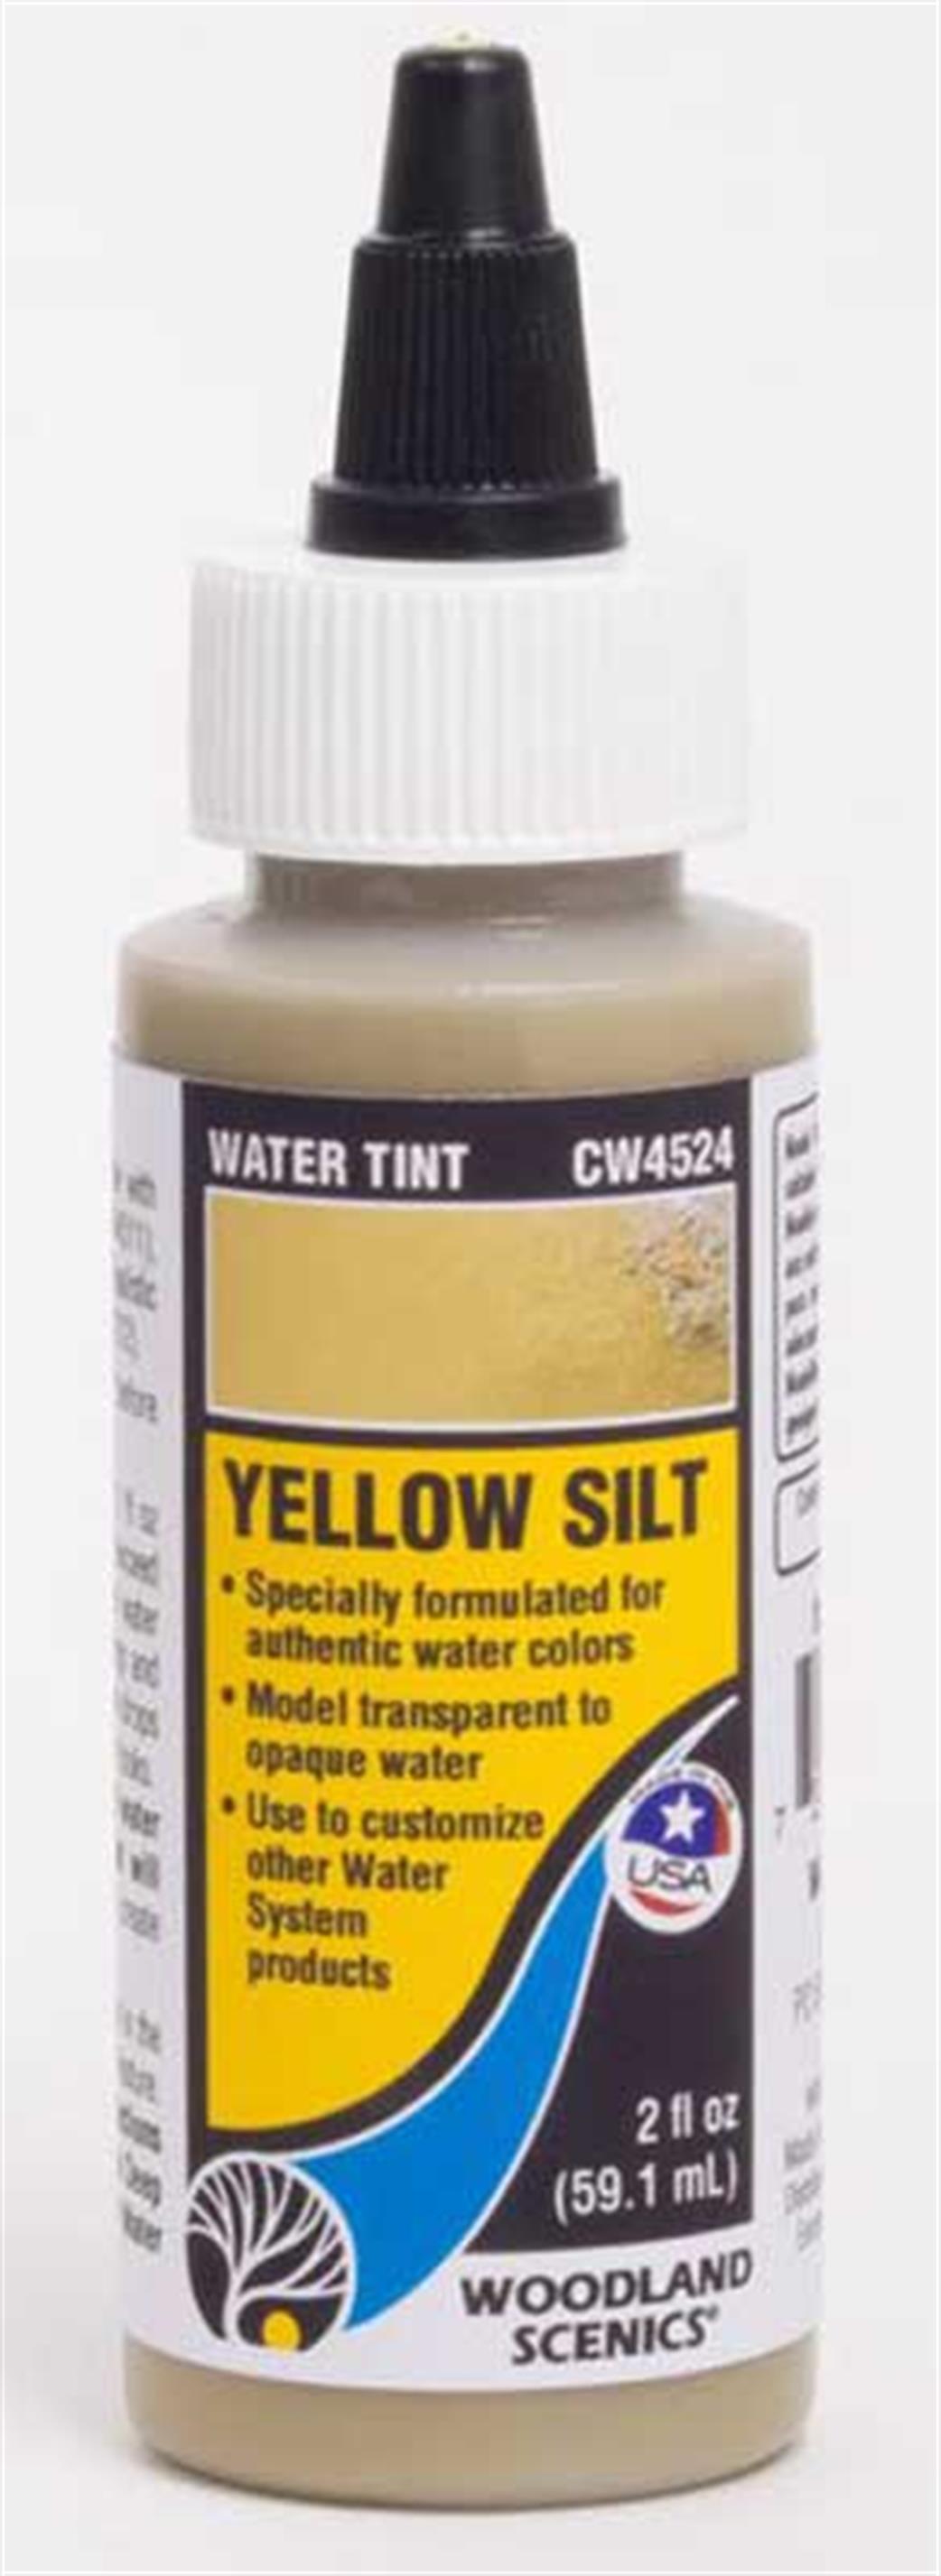 Woodland Scenics CW4524 Yellow Silt Water Tint